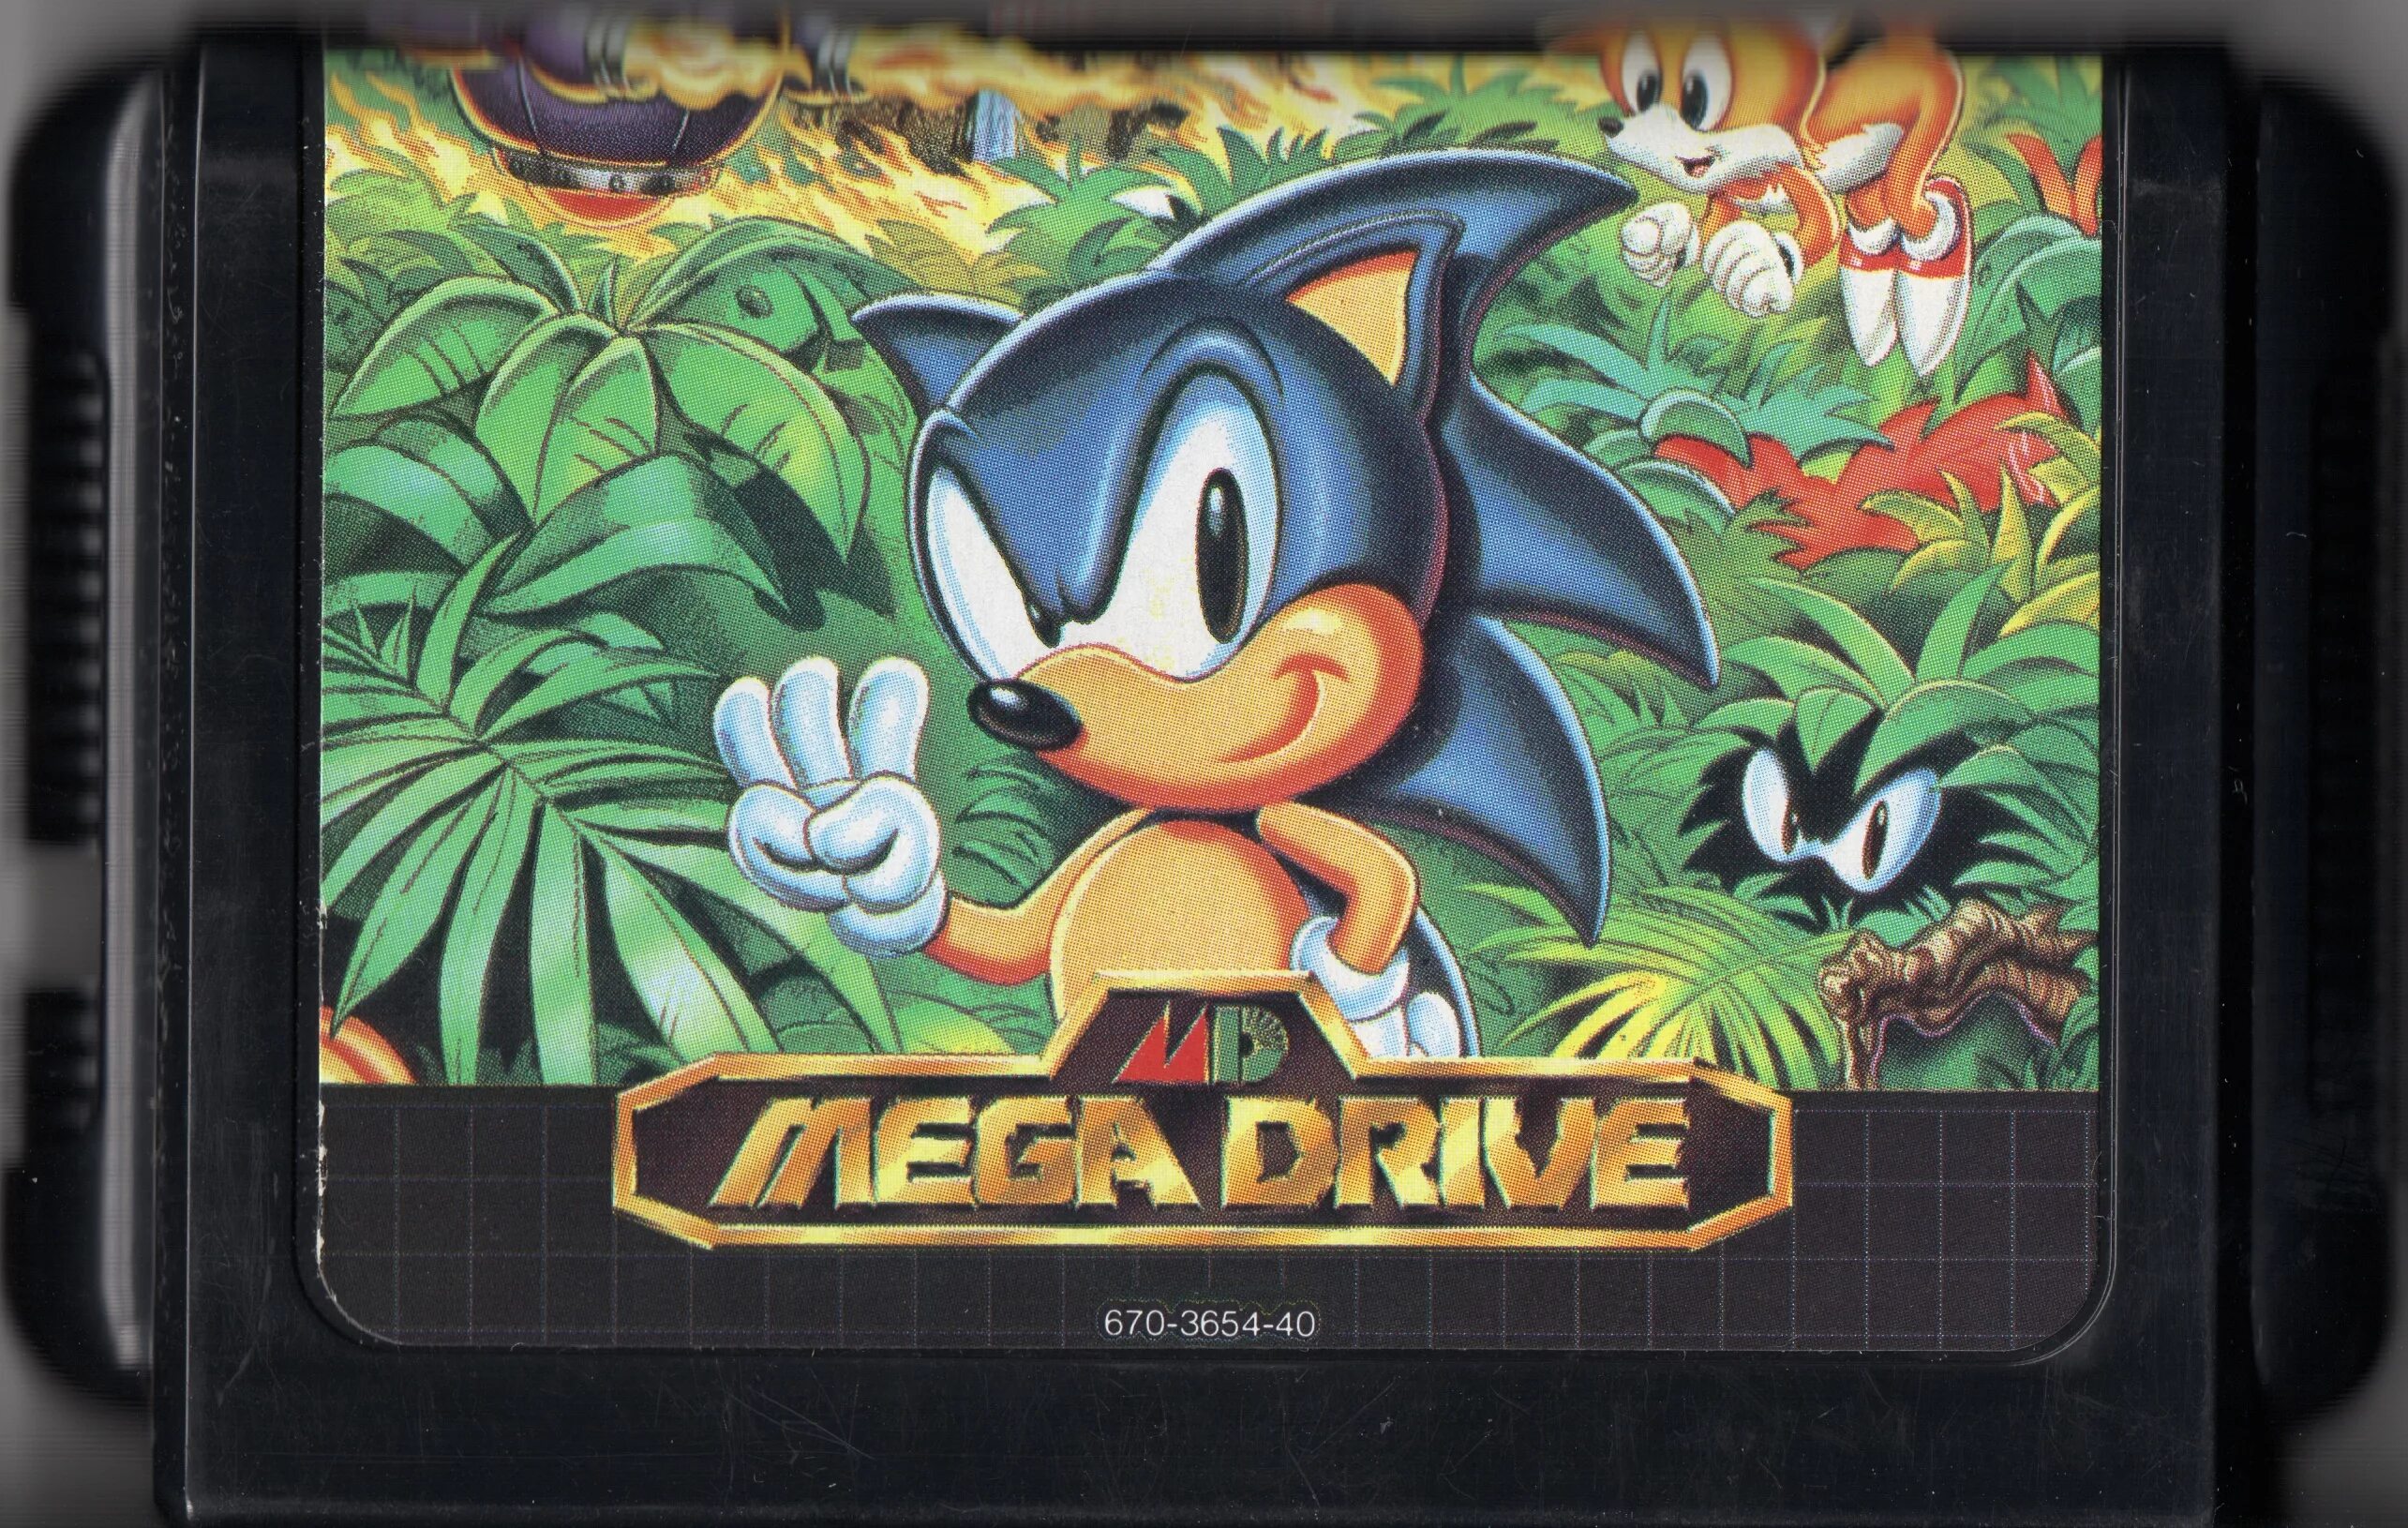 Sega Mega Drive картриджи Sonic. Sega Mega Drive Cartridge Sonic 1. Sega Mega Drive 2 картриджи Sonic. Sonic 3 Sega Mega Drive.